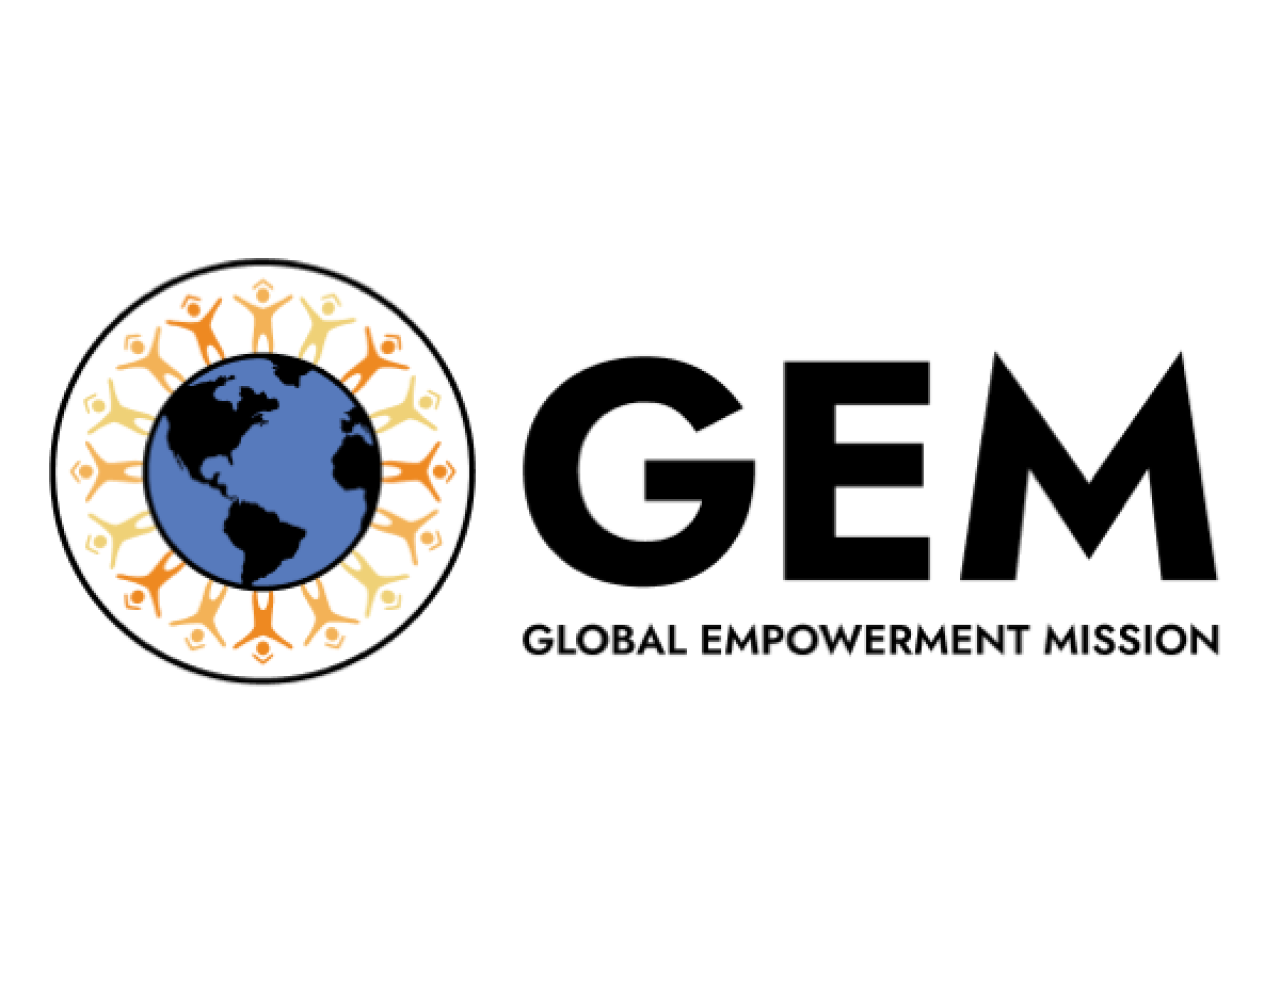 global empowerment mission logo.